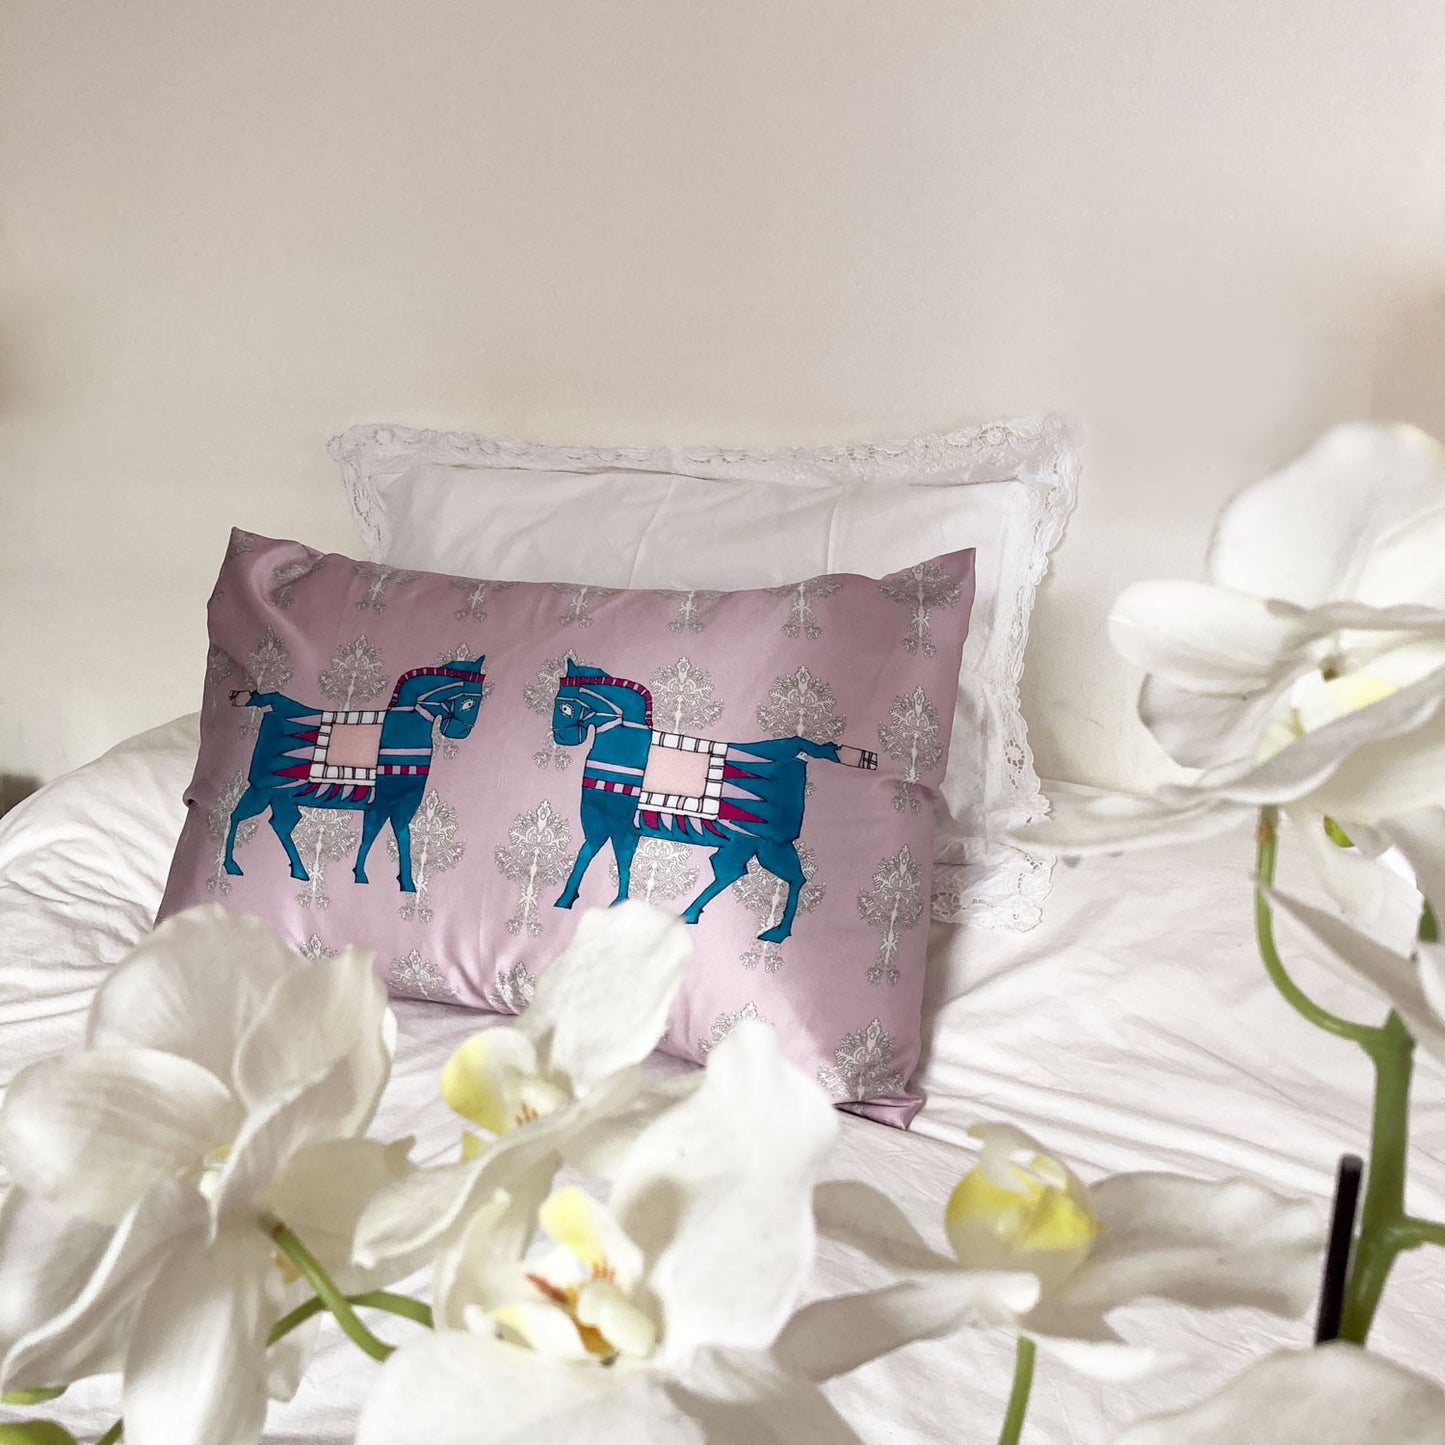 Silk Pillowcase - Pink With Horse Design